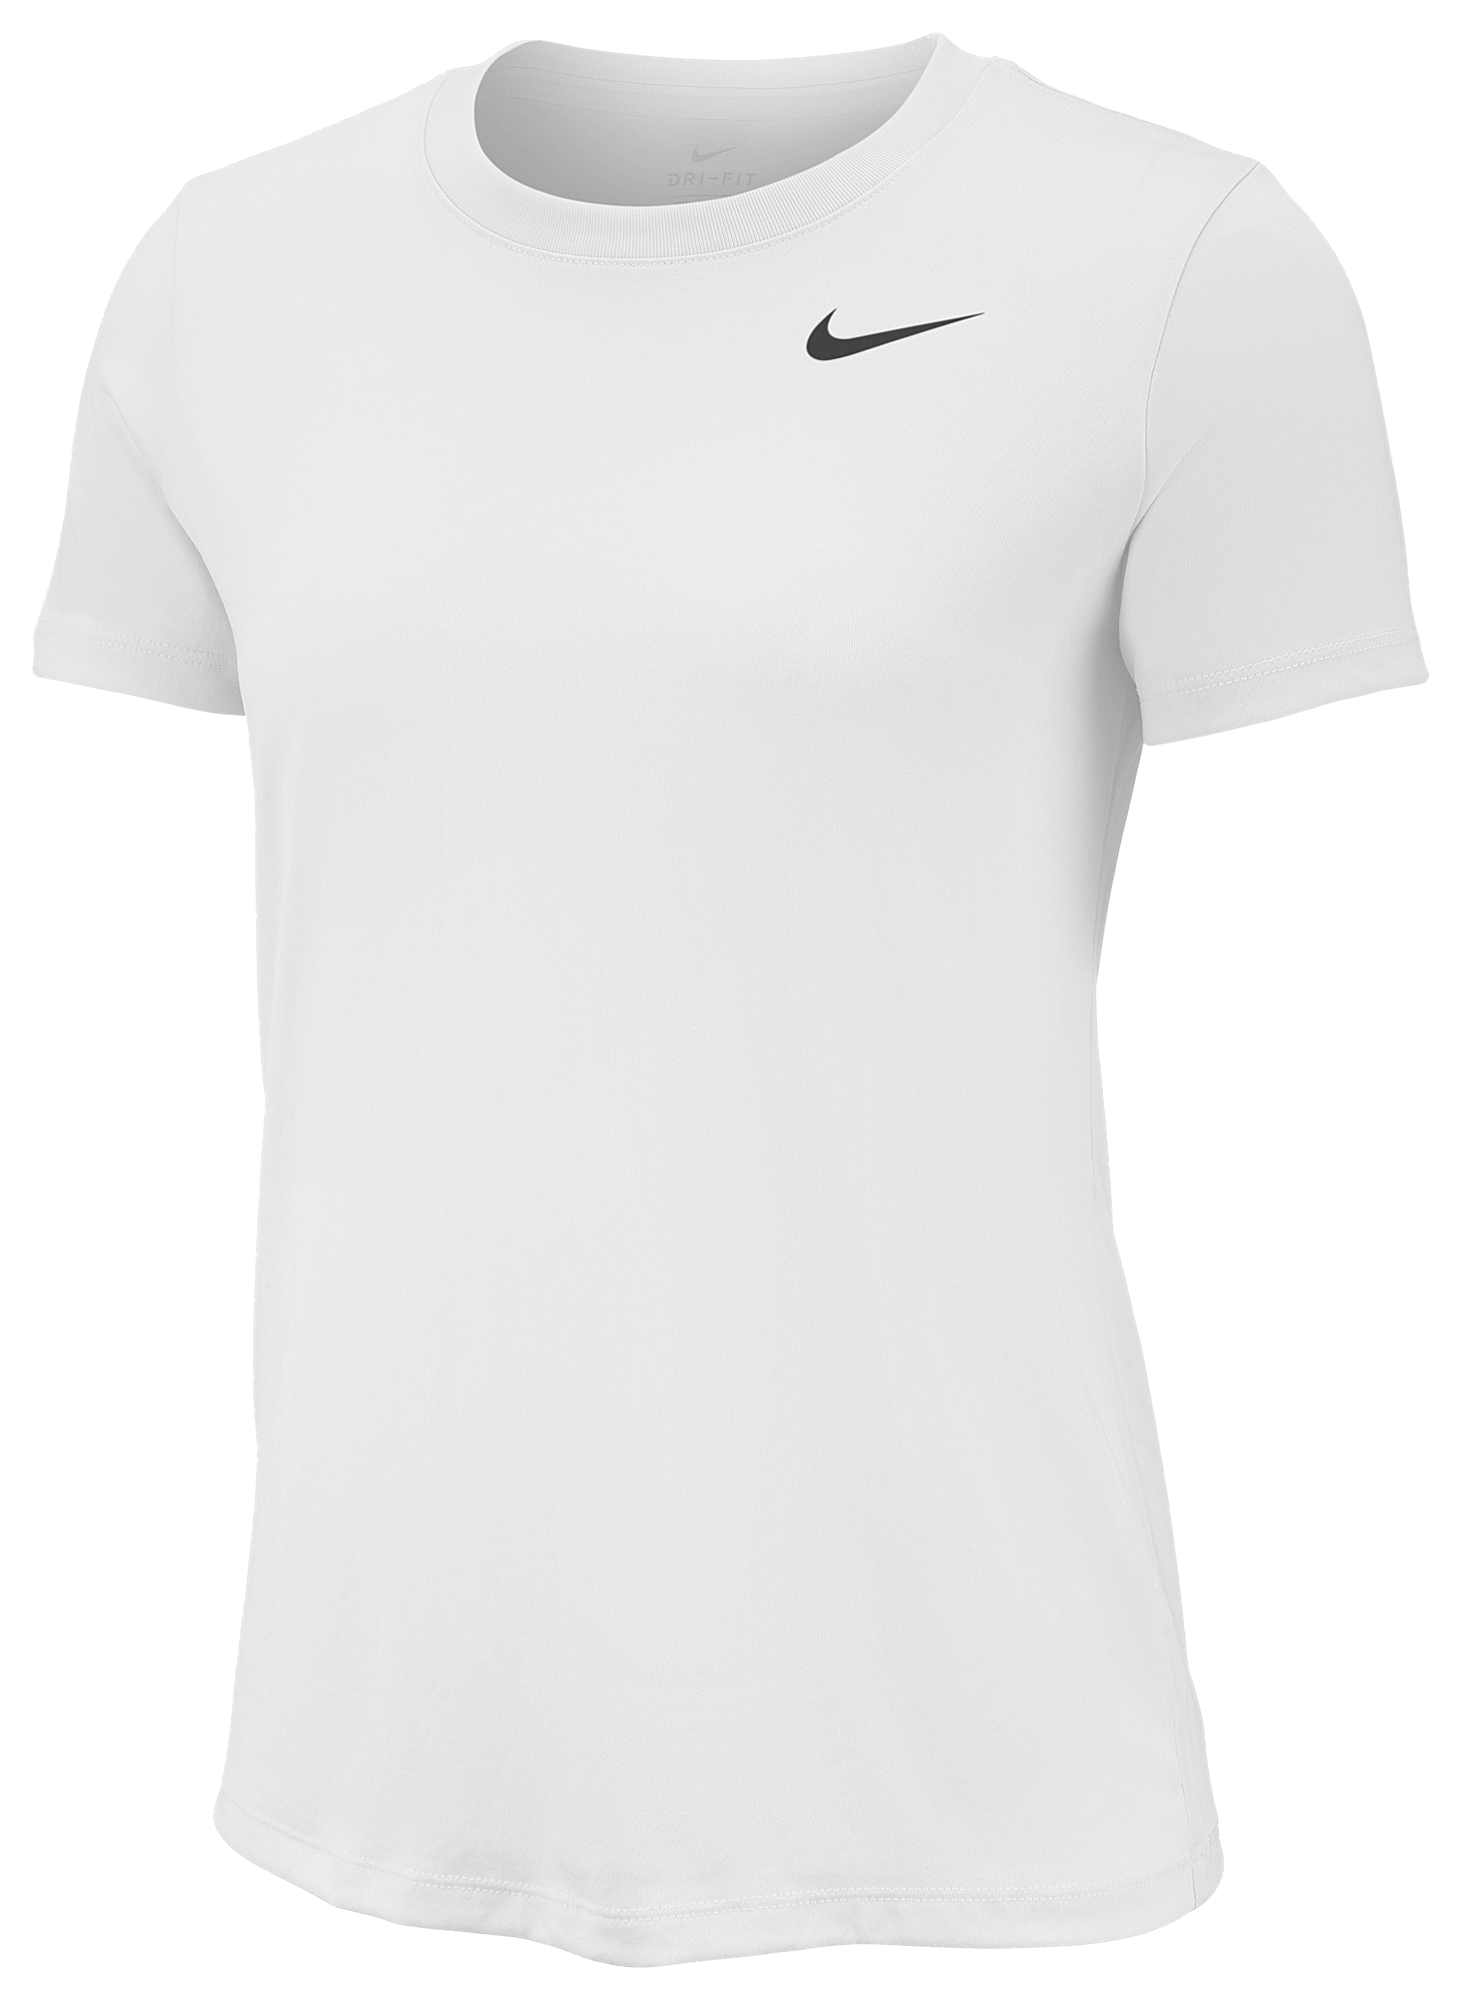 Nike Legend T-Shirt - Women's